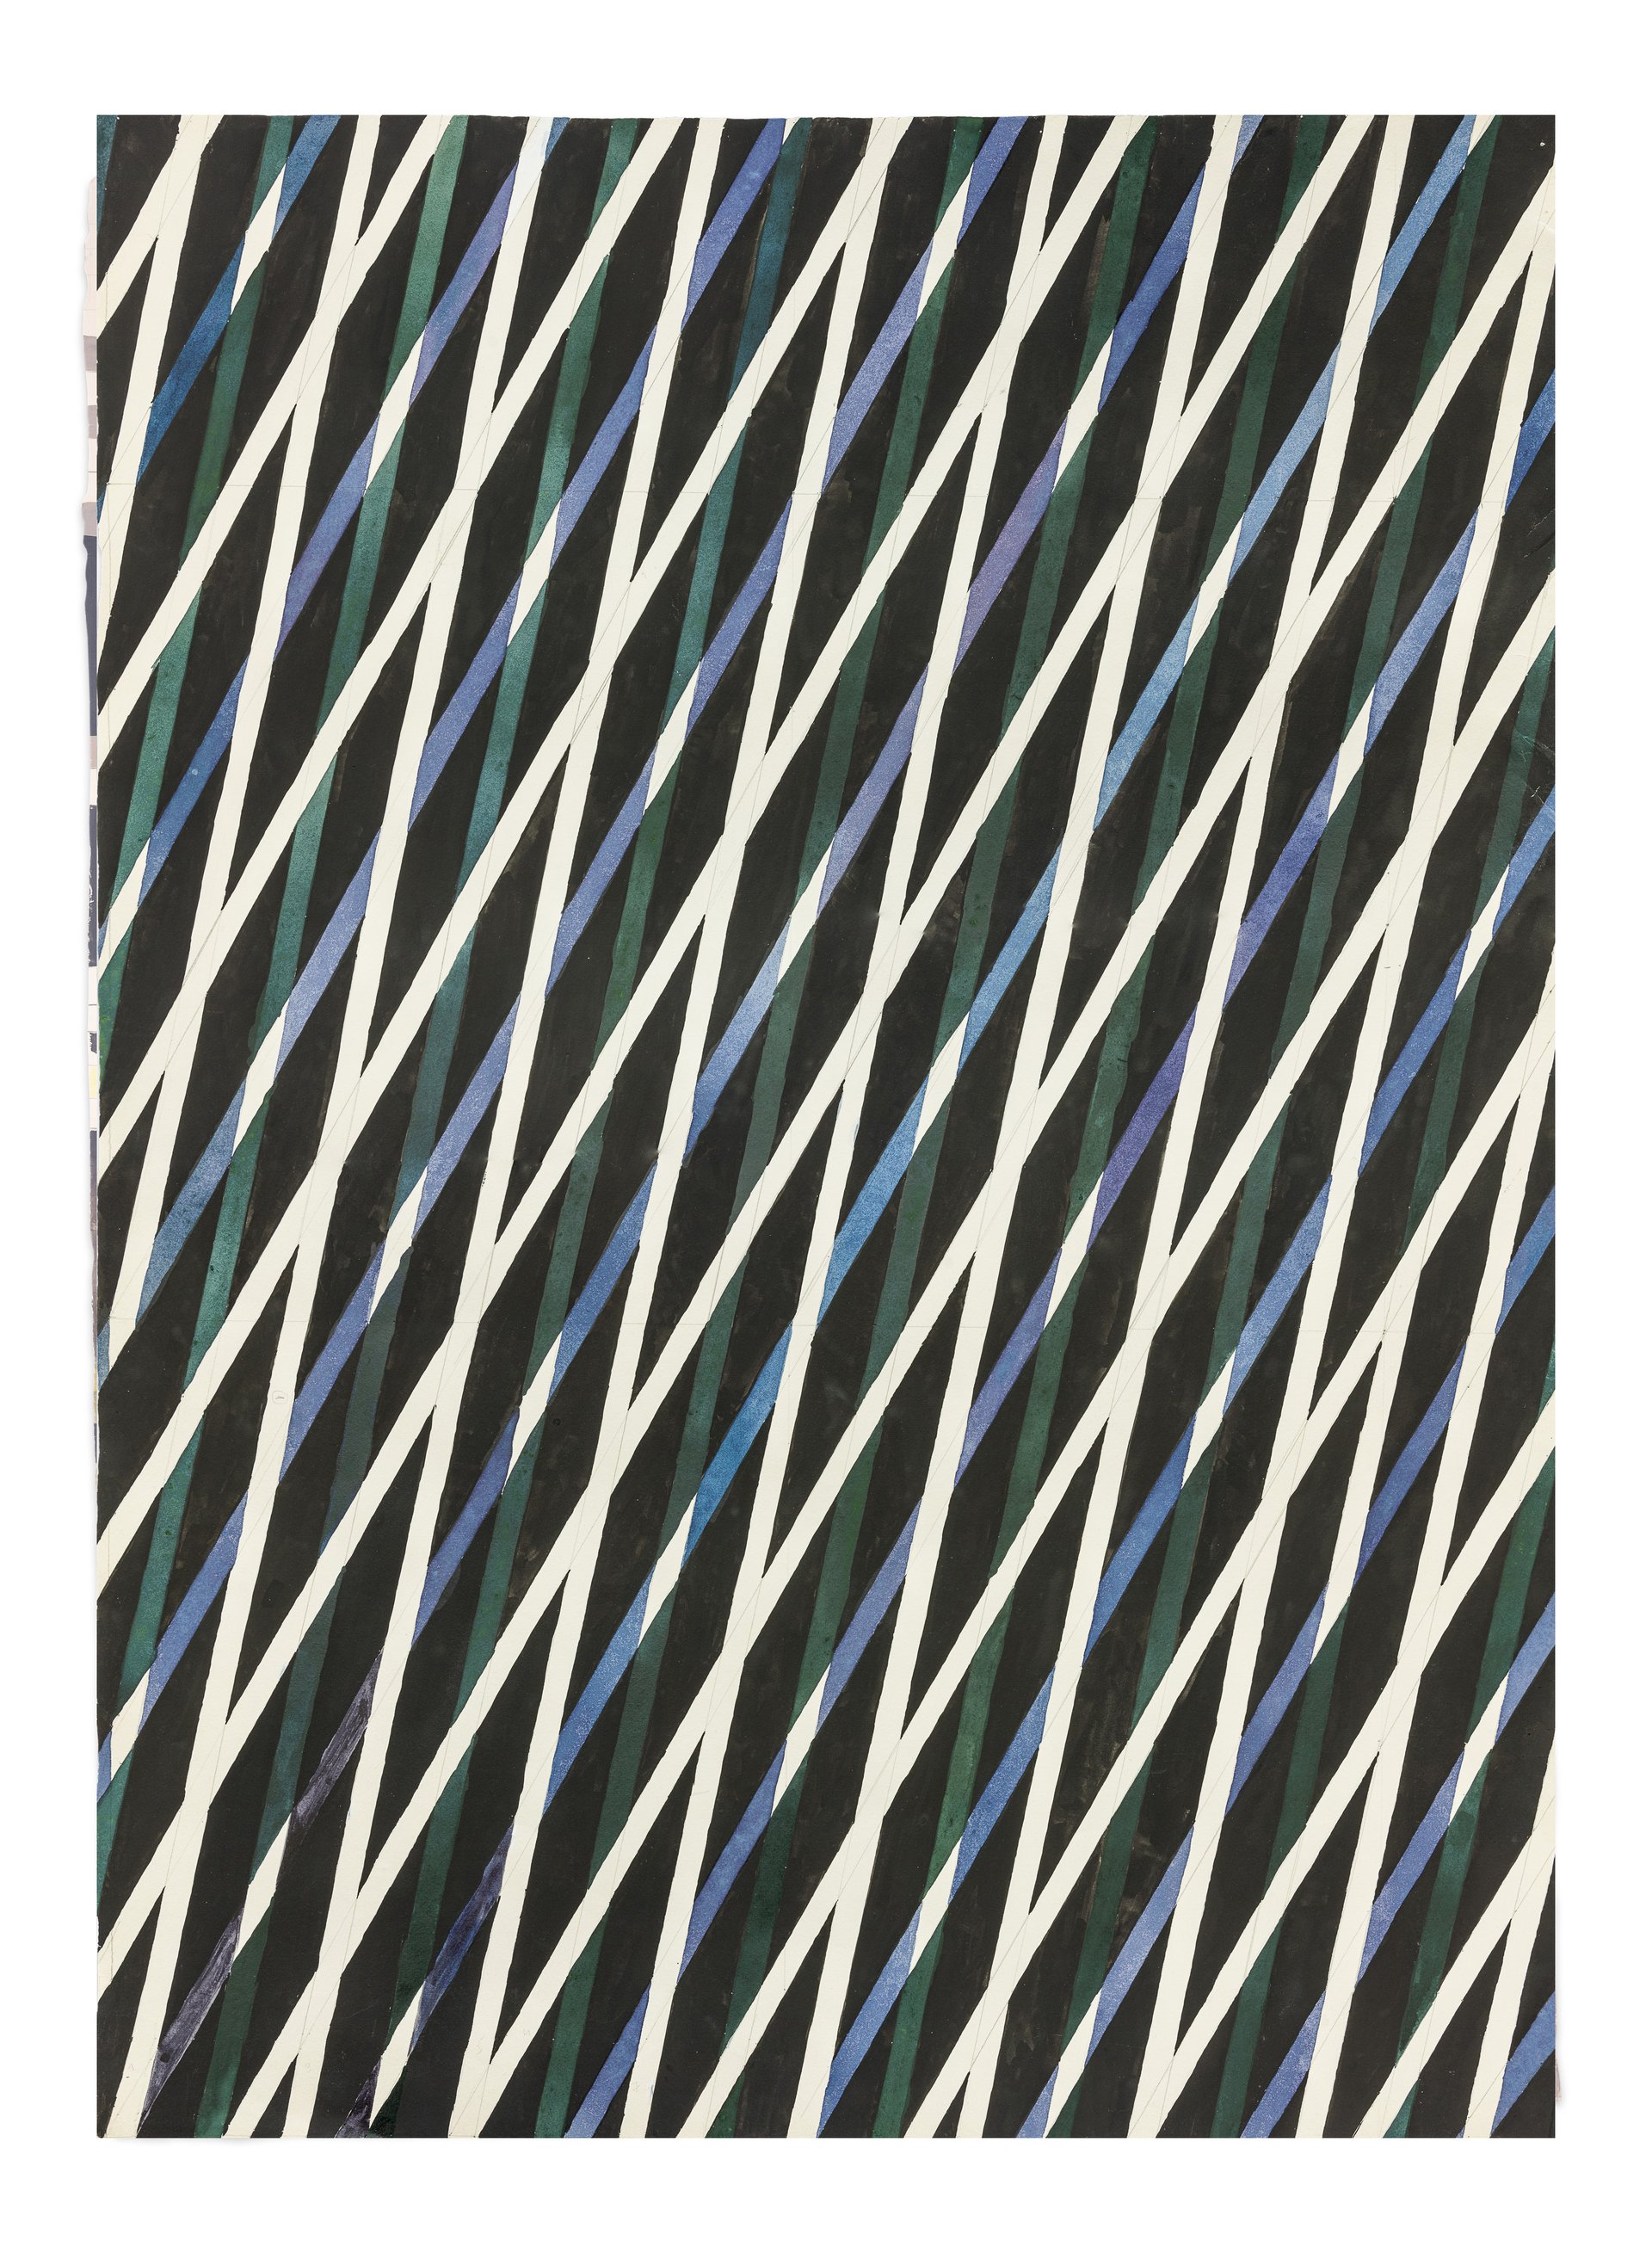 Anna AndreevaRadio Waves (Black/Green/Blue), 1974Mixed media on paper88.5 x 48 cm